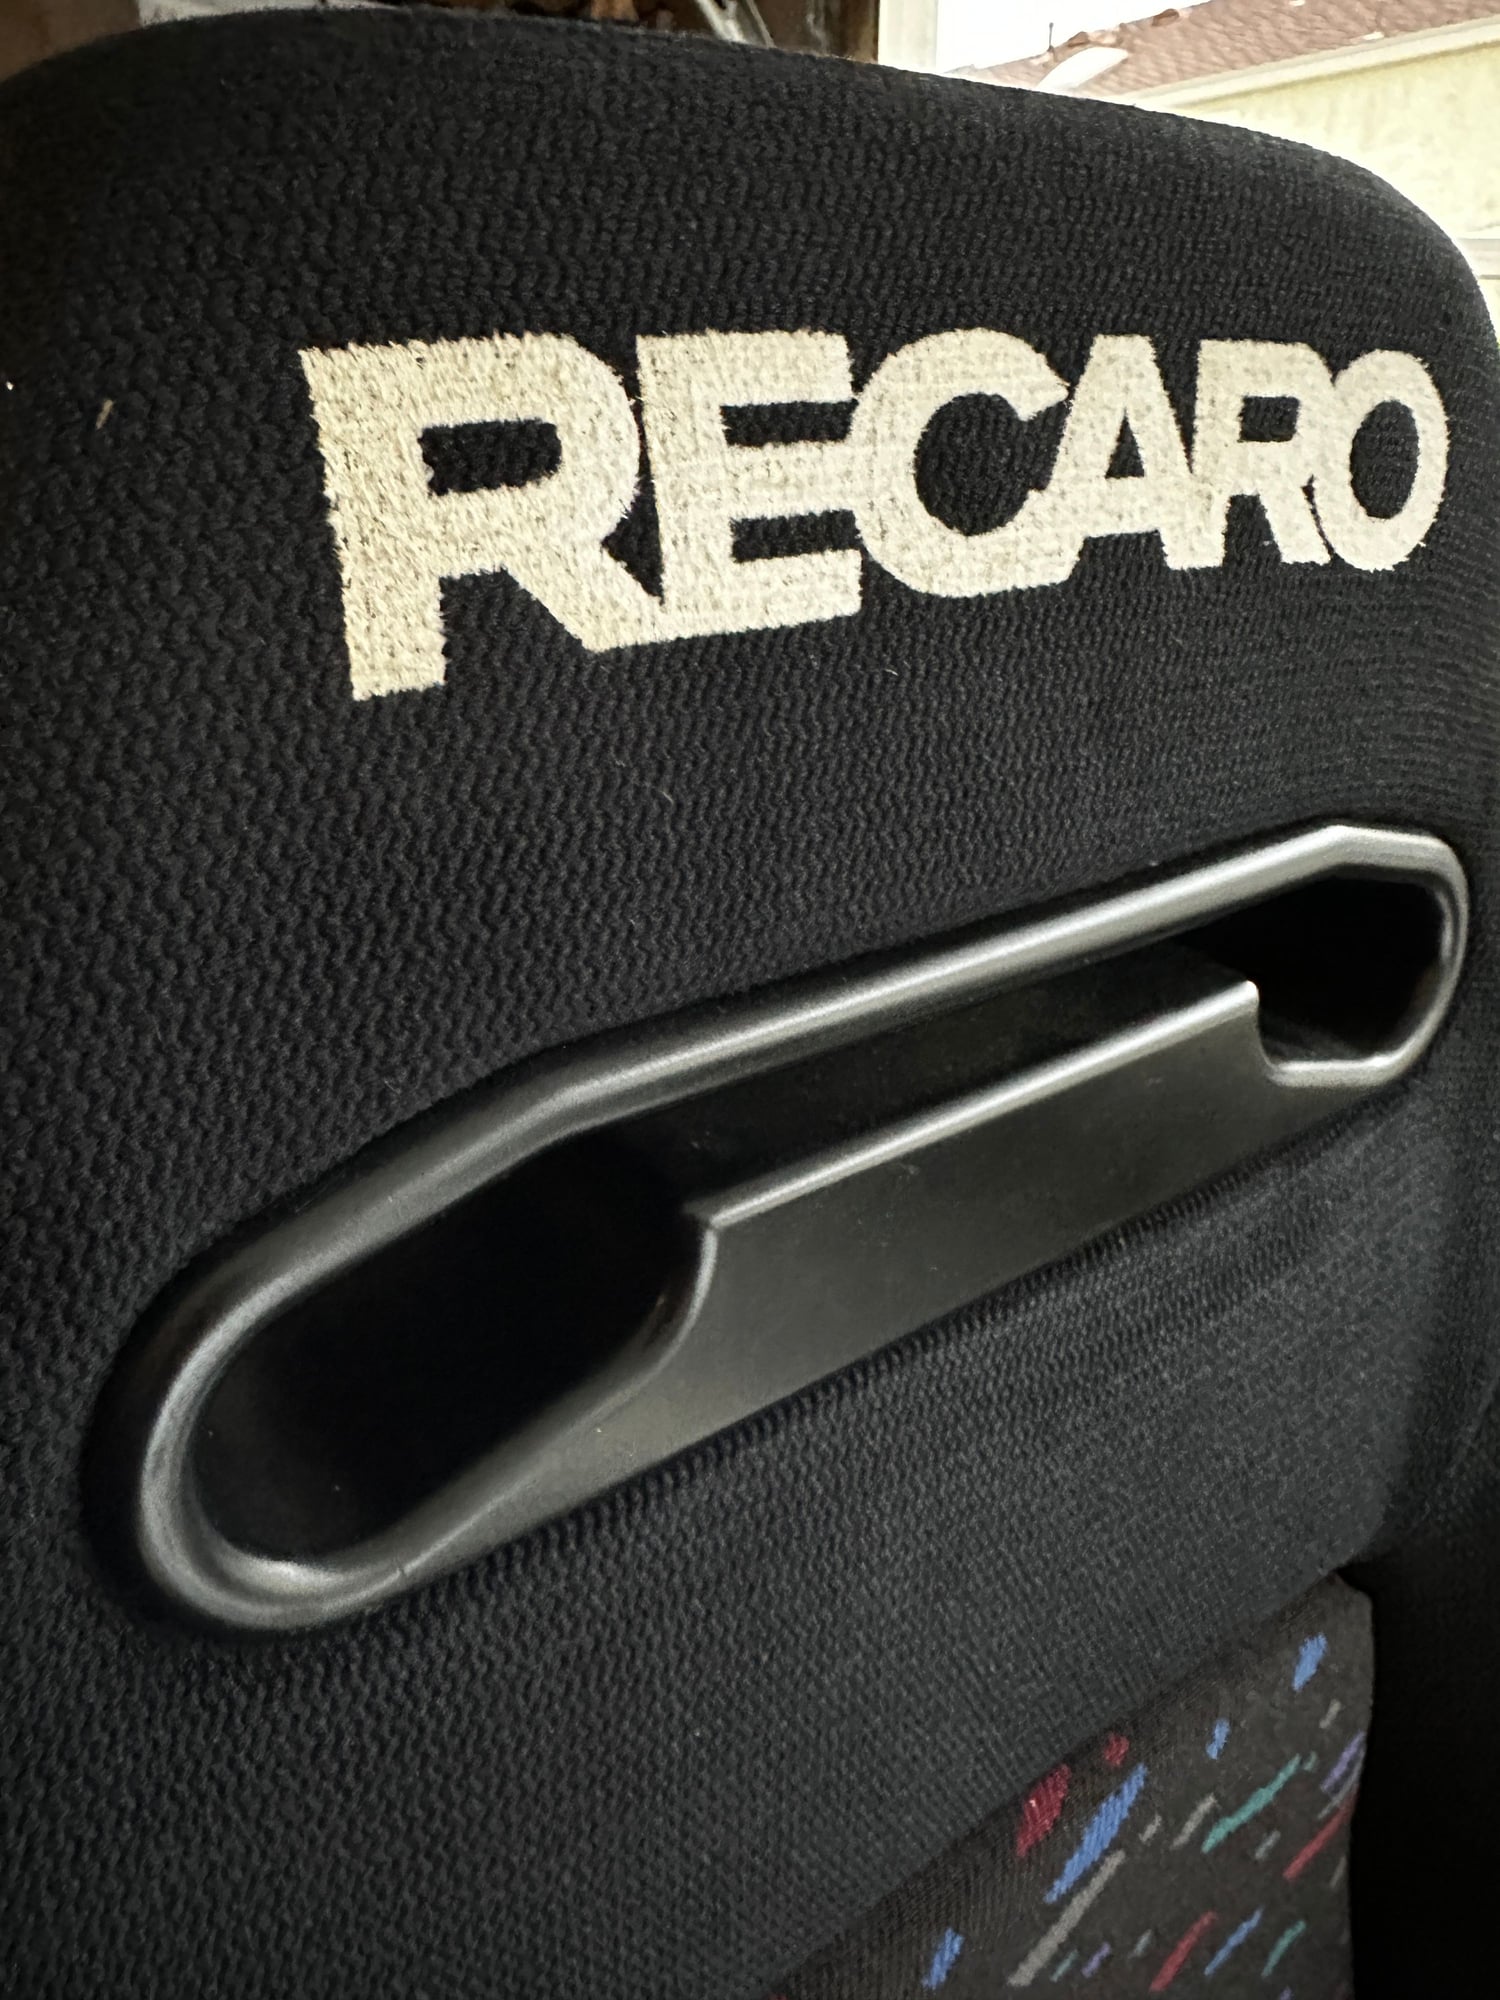 Interior/Upholstery - Recaro Sr2 Le Mans Confetti seats will come with BRIDE Type-RO Rails - Used - 1993 to 1998 Mazda RX-7 - Anaheim, CA 92804, United States